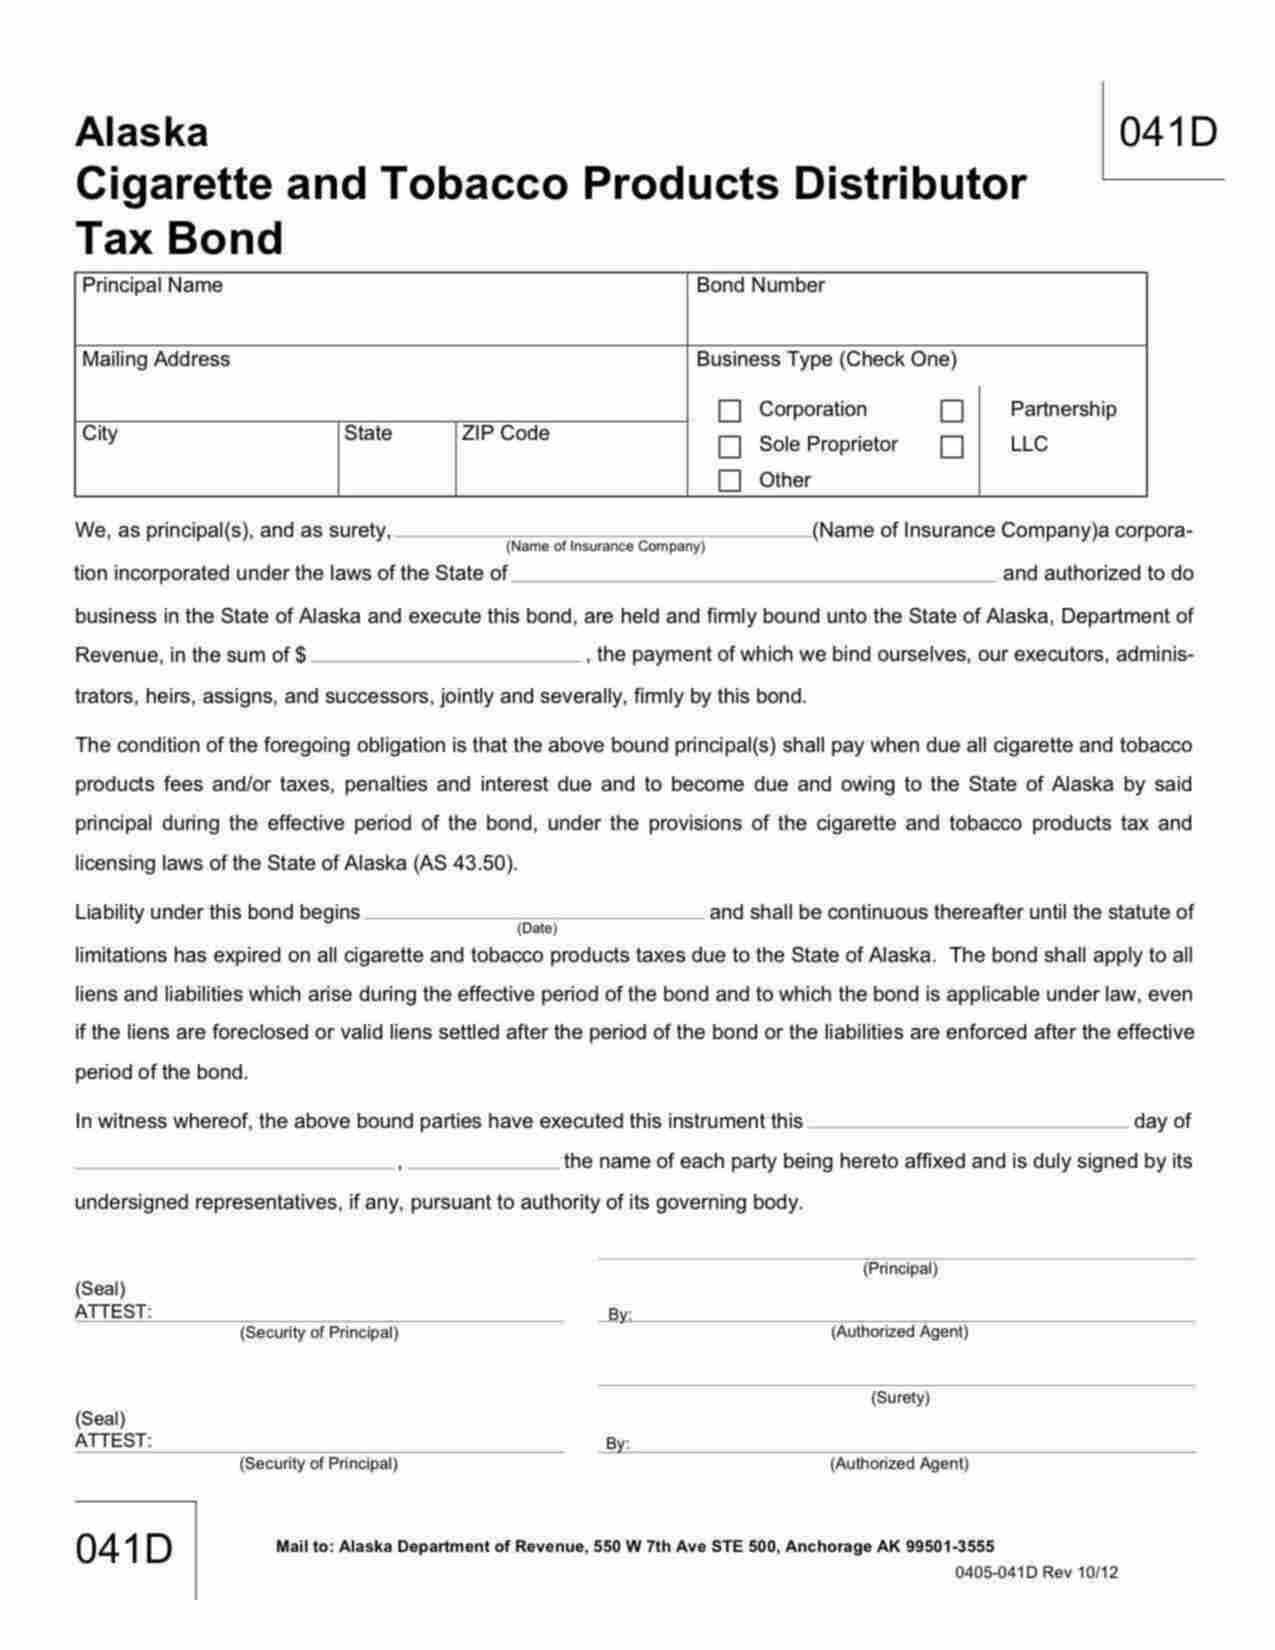 Alaska Cigarette and Tobacco Products Distributor Bond Form